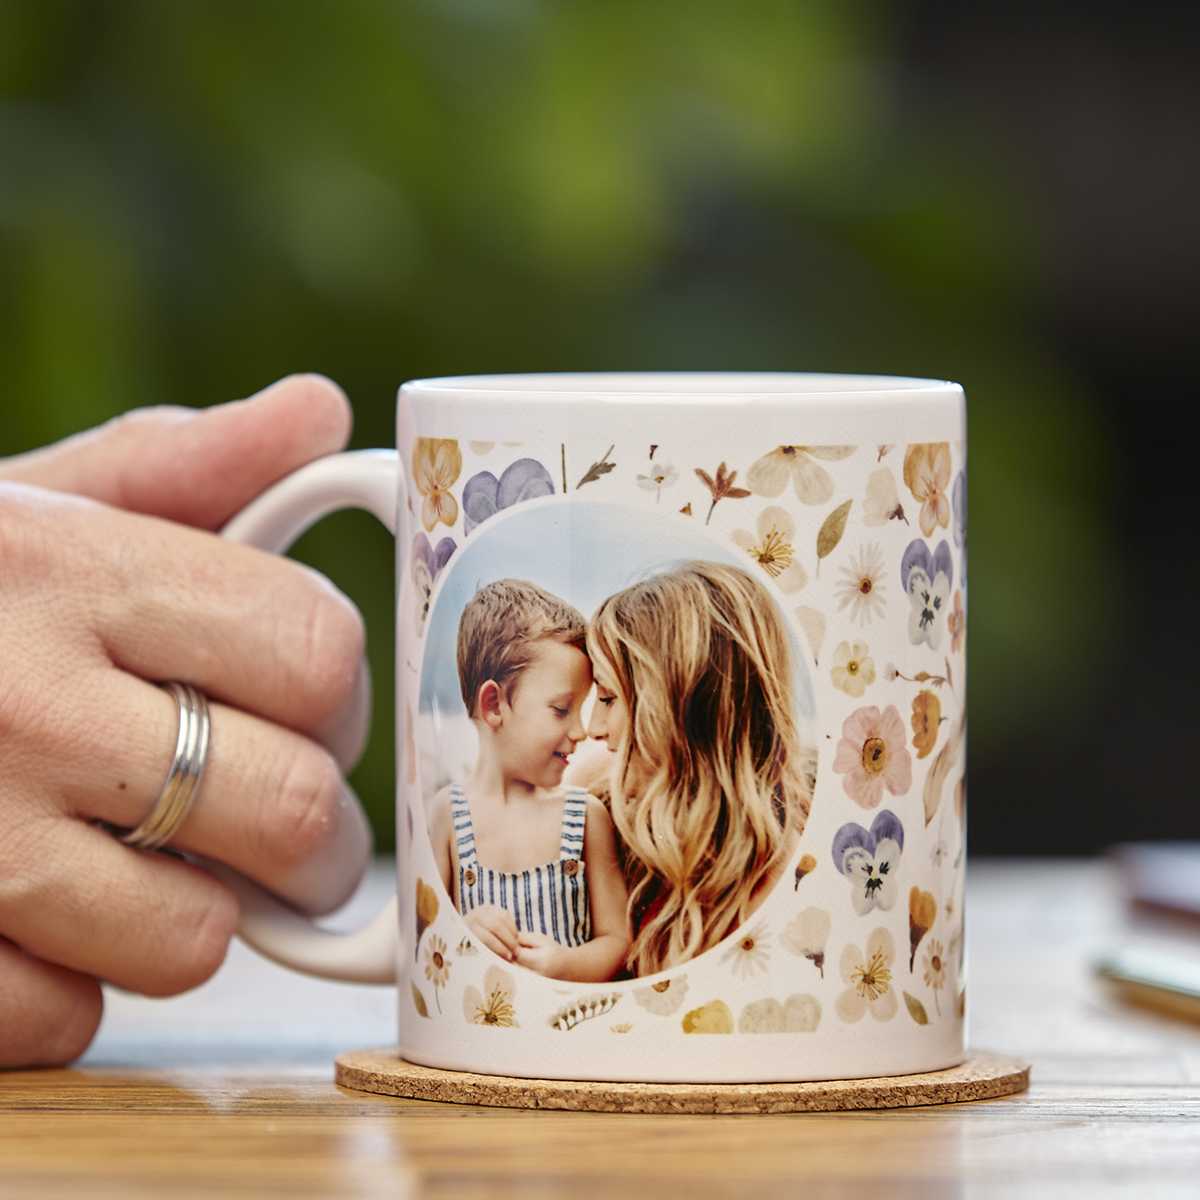 Mom and son photo on photo mug